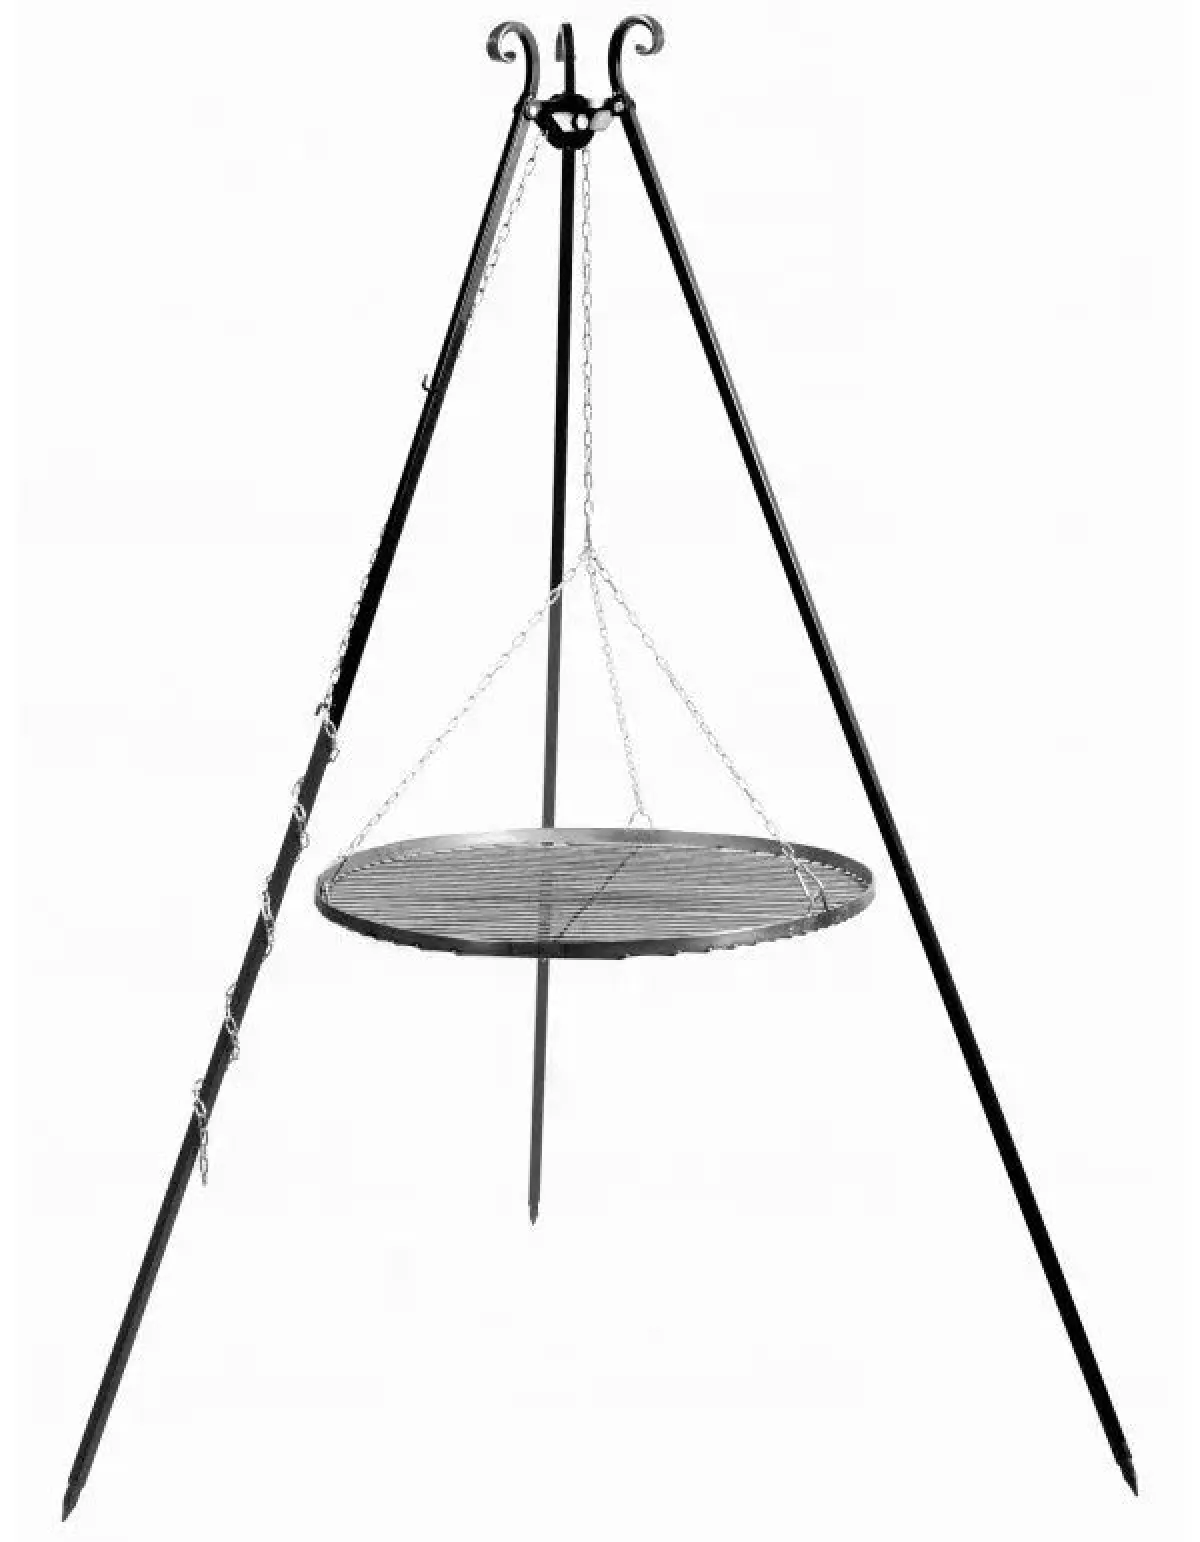 #1 - Bålstativ / Bålsæt 180 cm med grillrist - 60 diameter